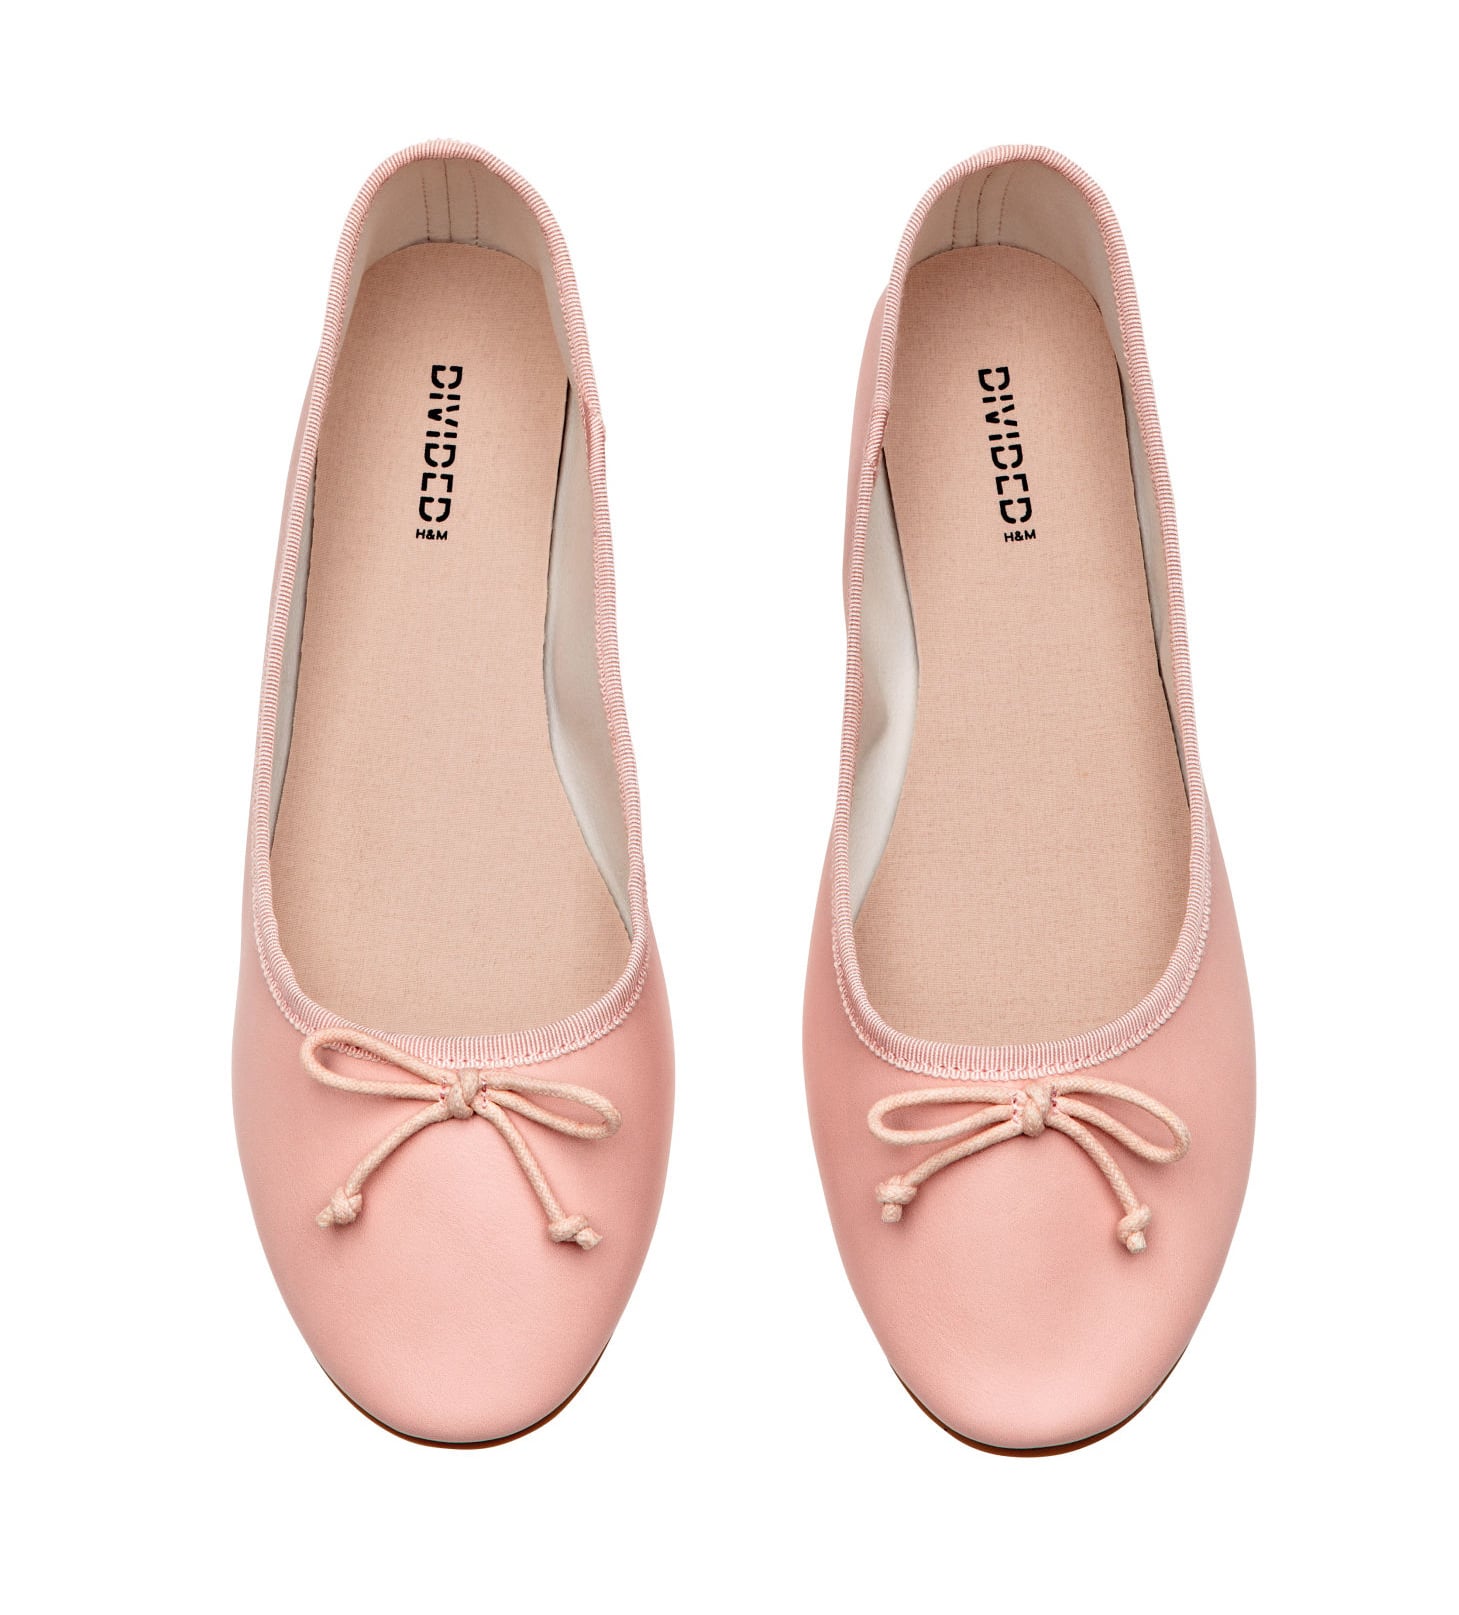 h&m ballerina shoes